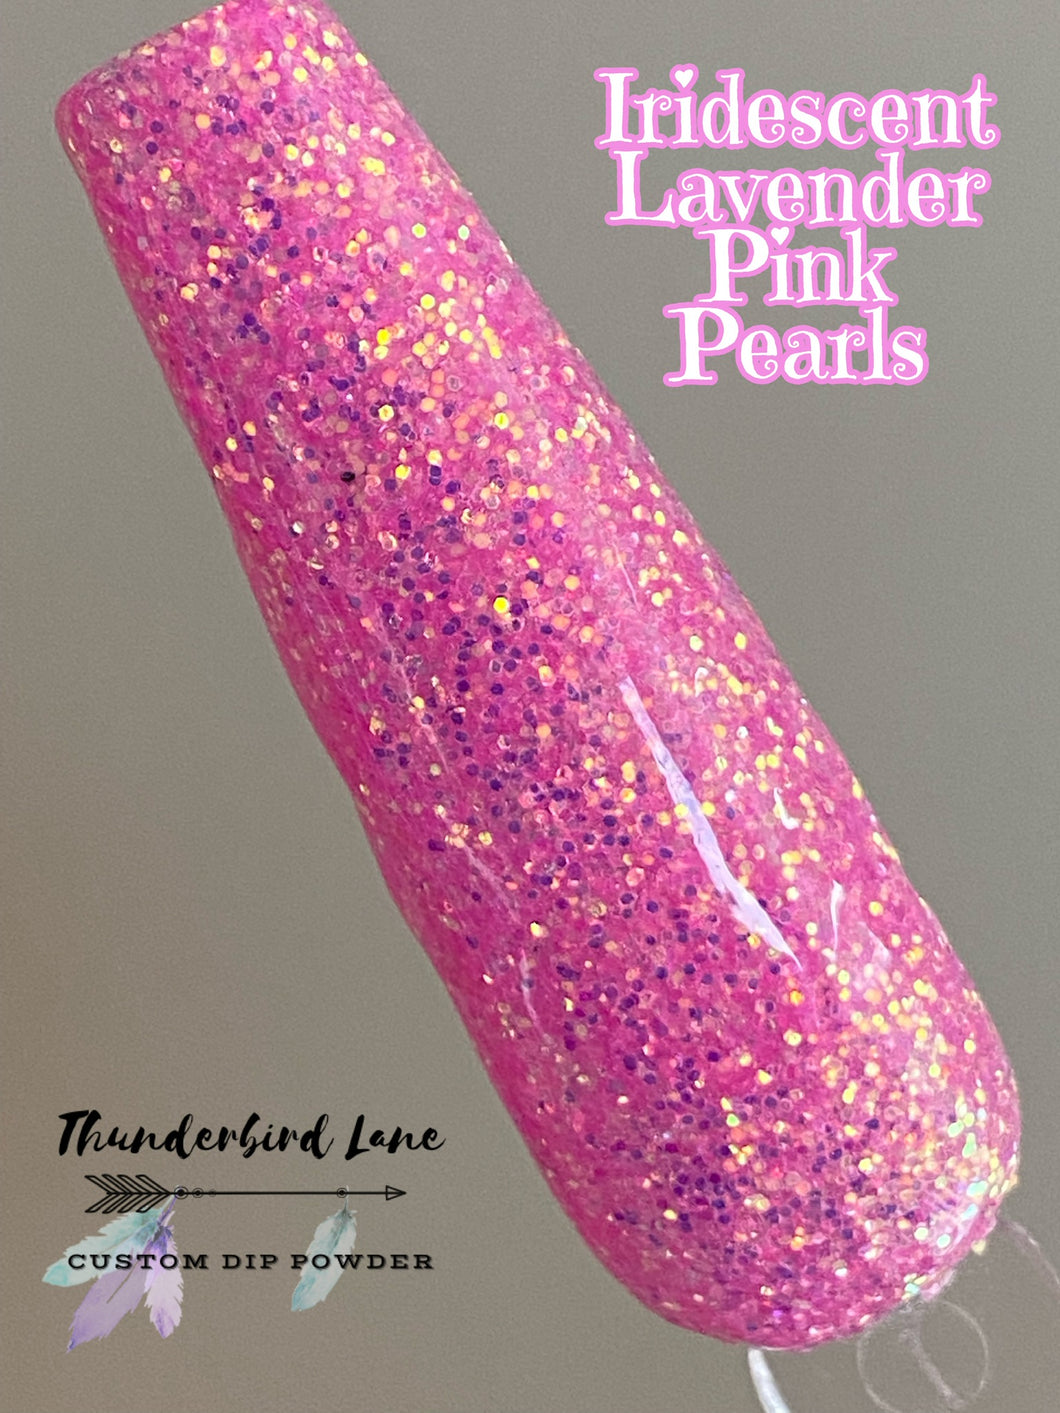 Iridescent Lavender Pink Pearls